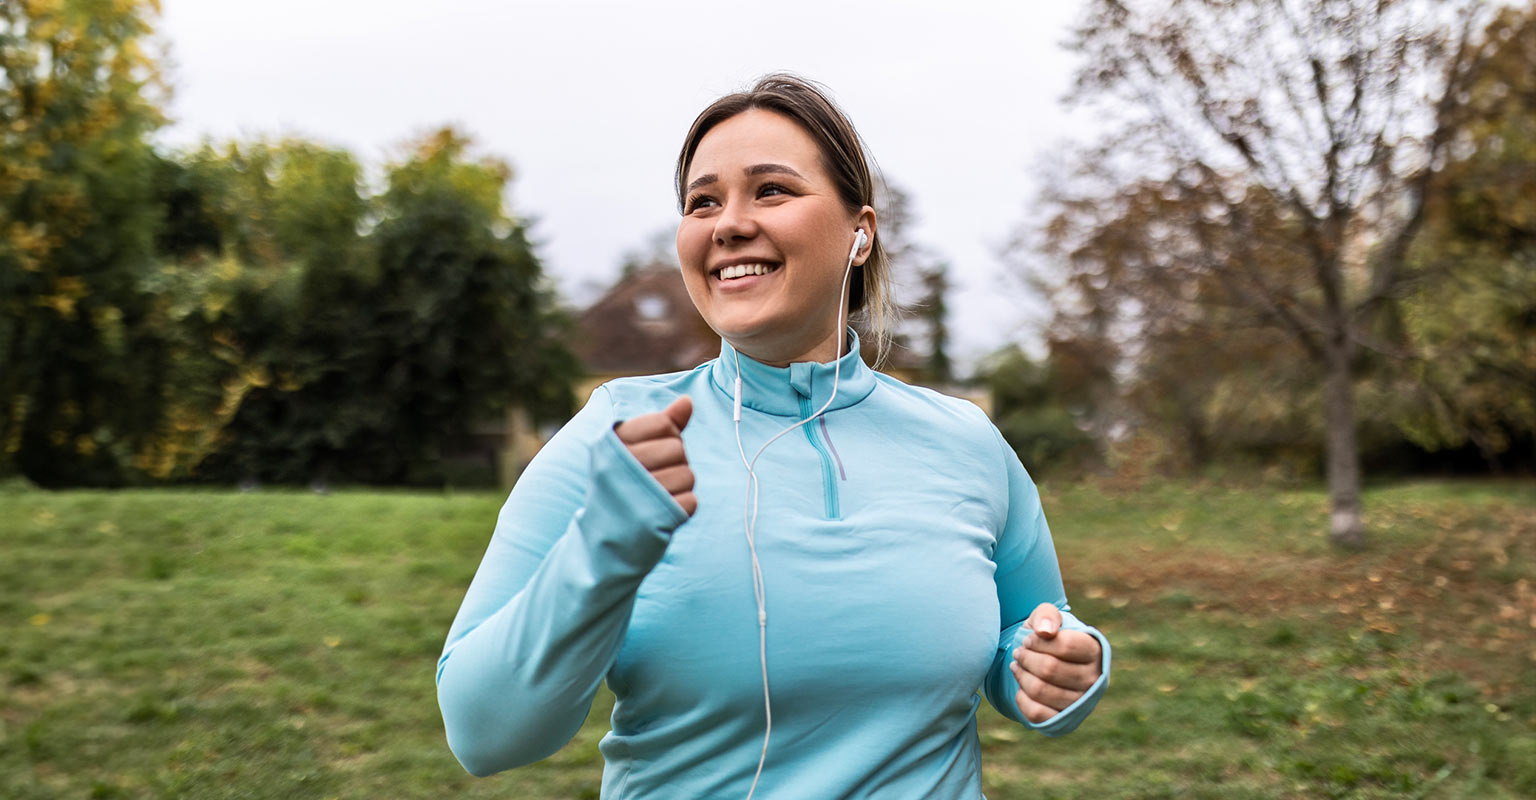 Woman jogging through a park listening to headphones